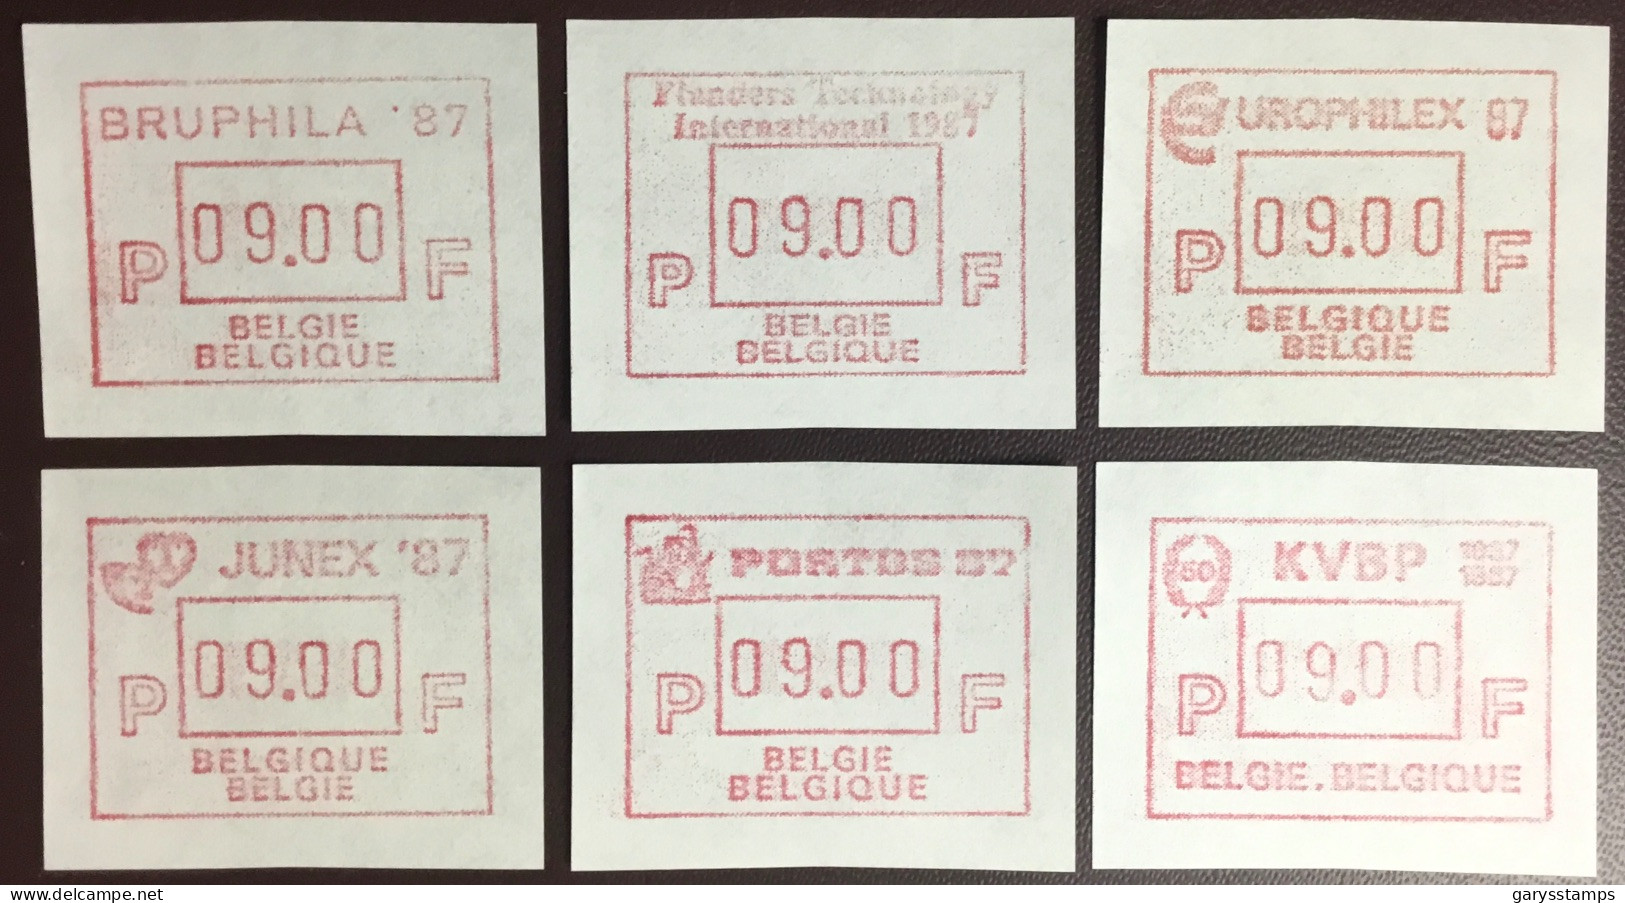 Belgium 1987 ATM Machine Stamps MNH - Nuevos